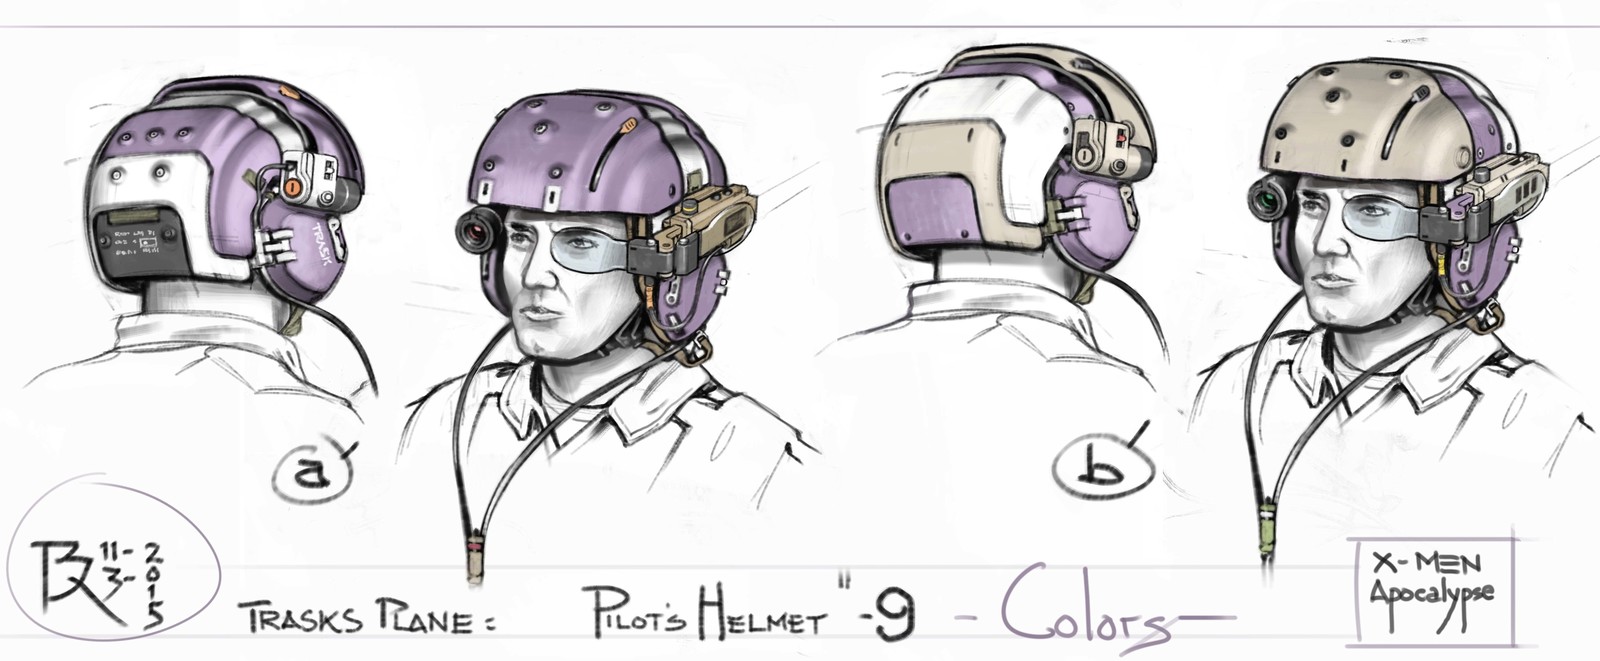 PILOT's HELMET-Trask's Plane -sketches 9a+b
